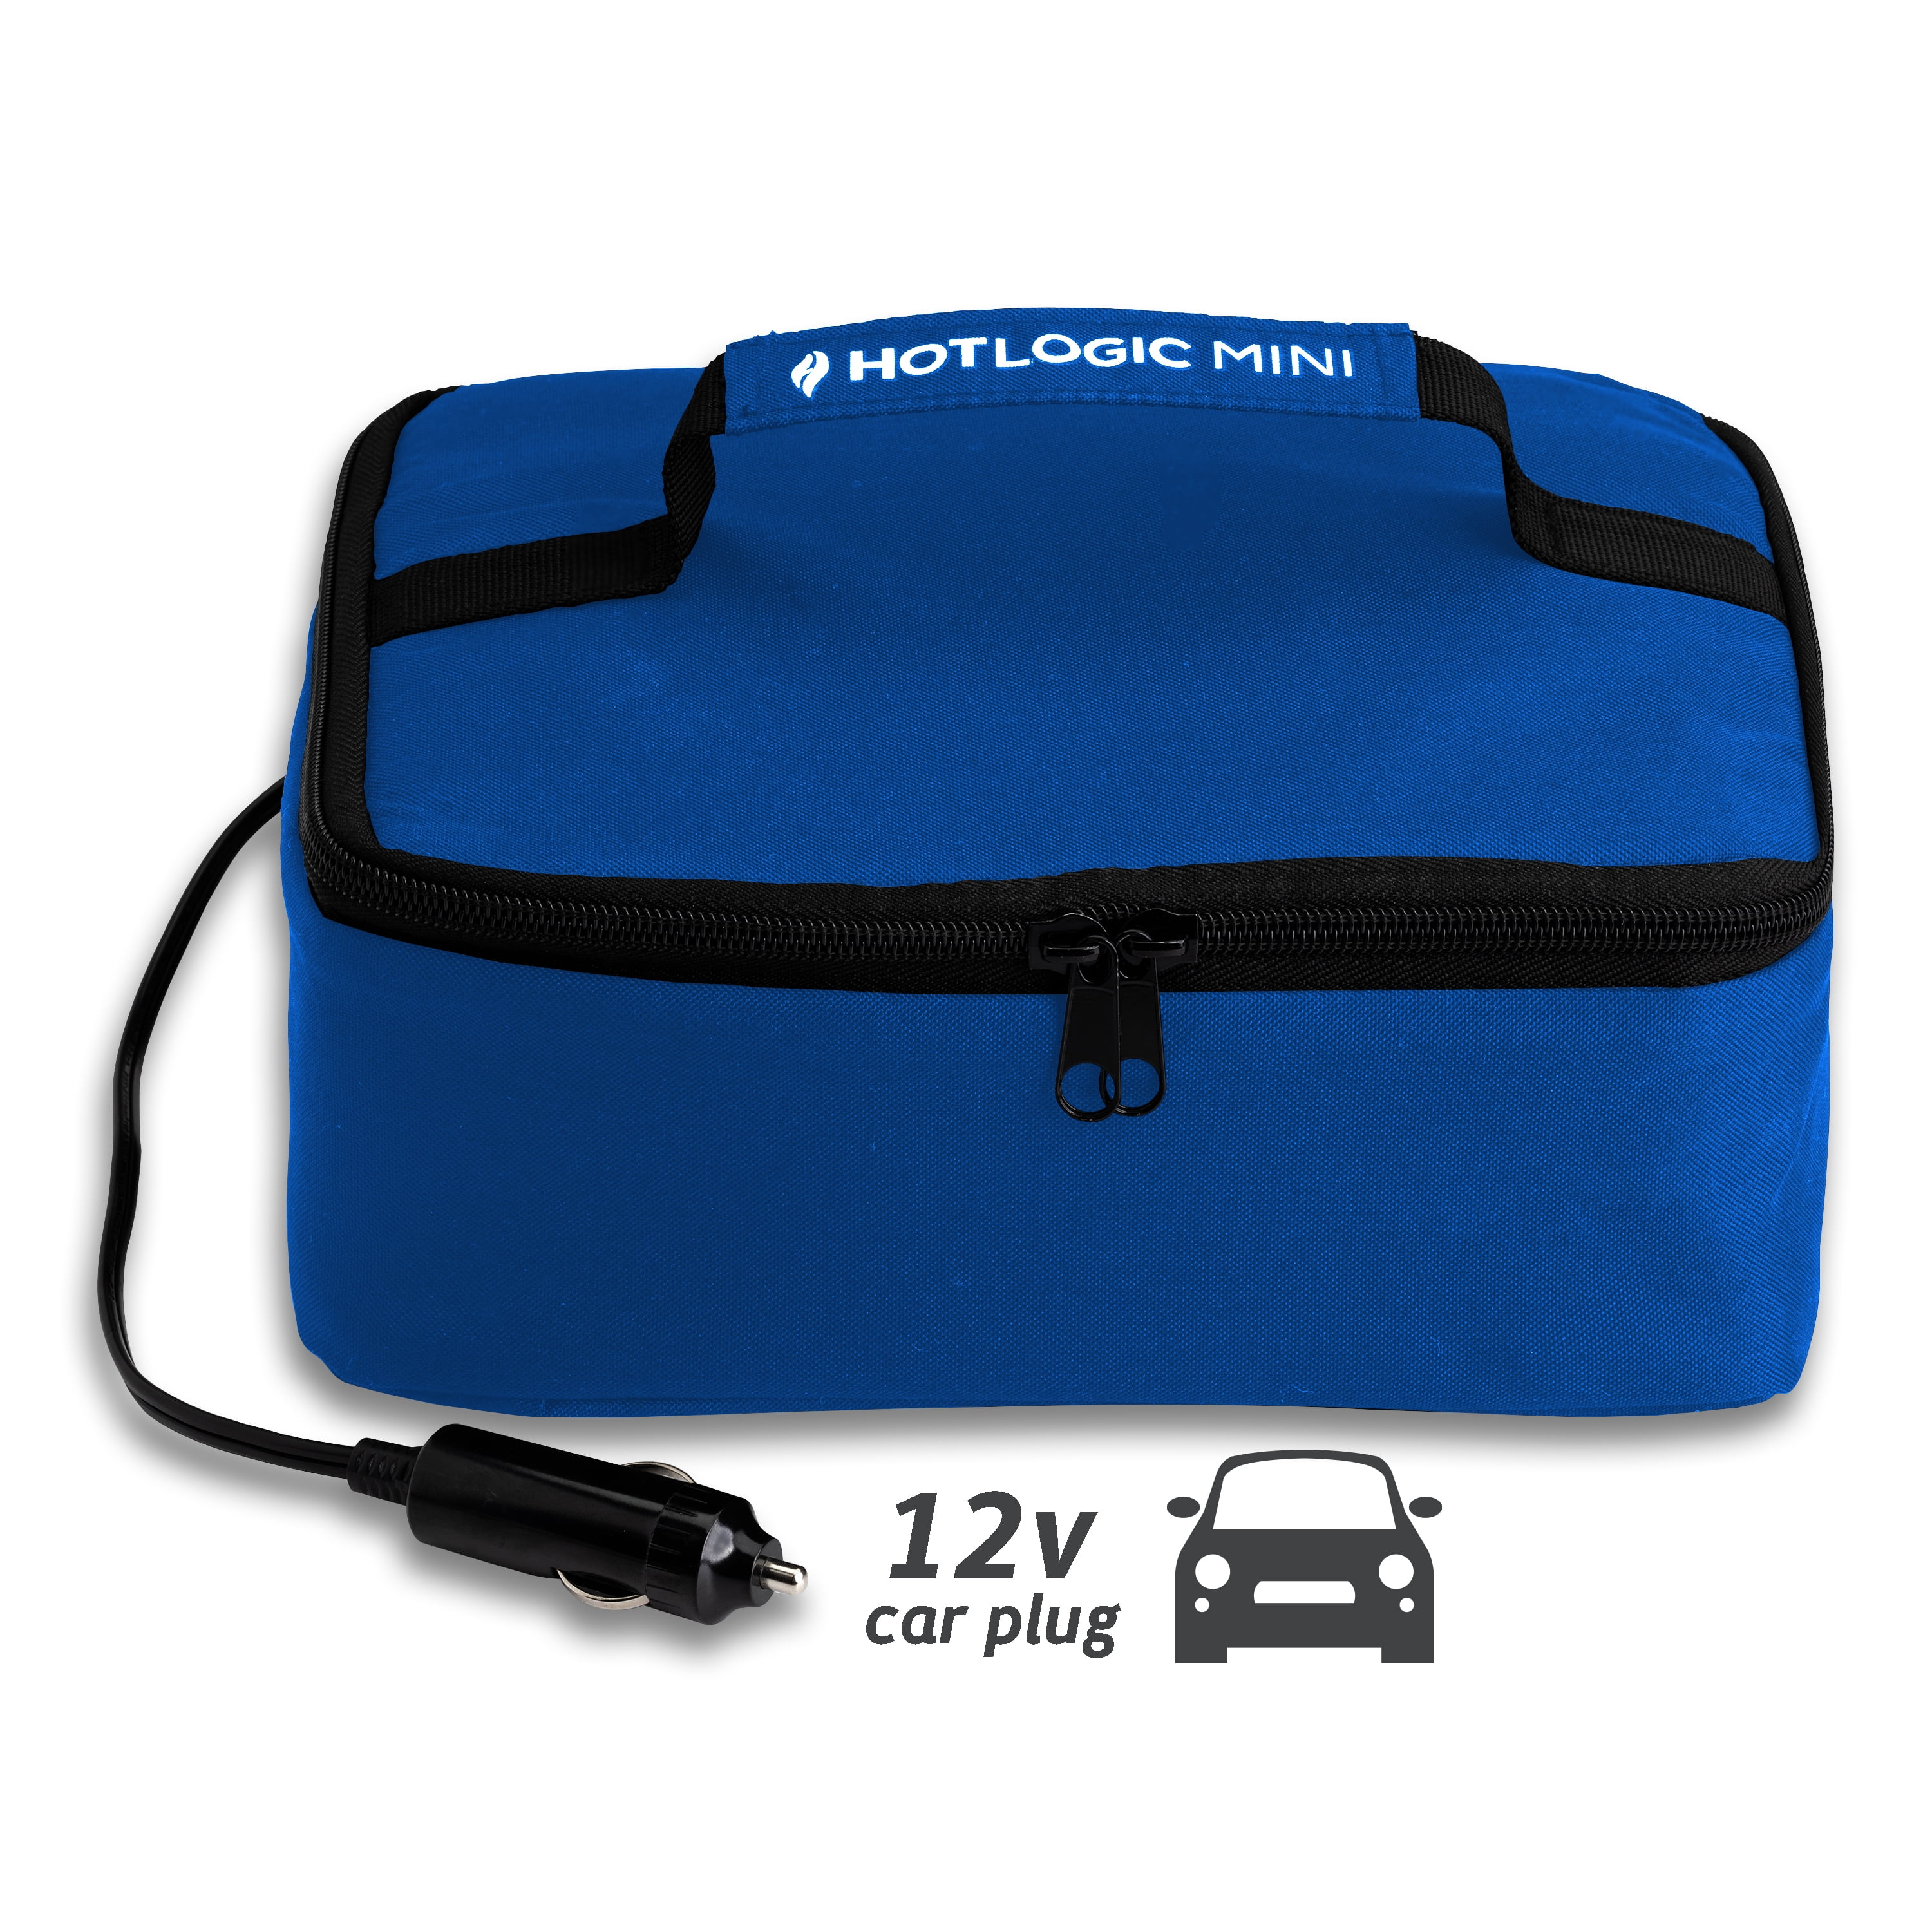 Hotlogic Mini Personal Portable Oven Blue